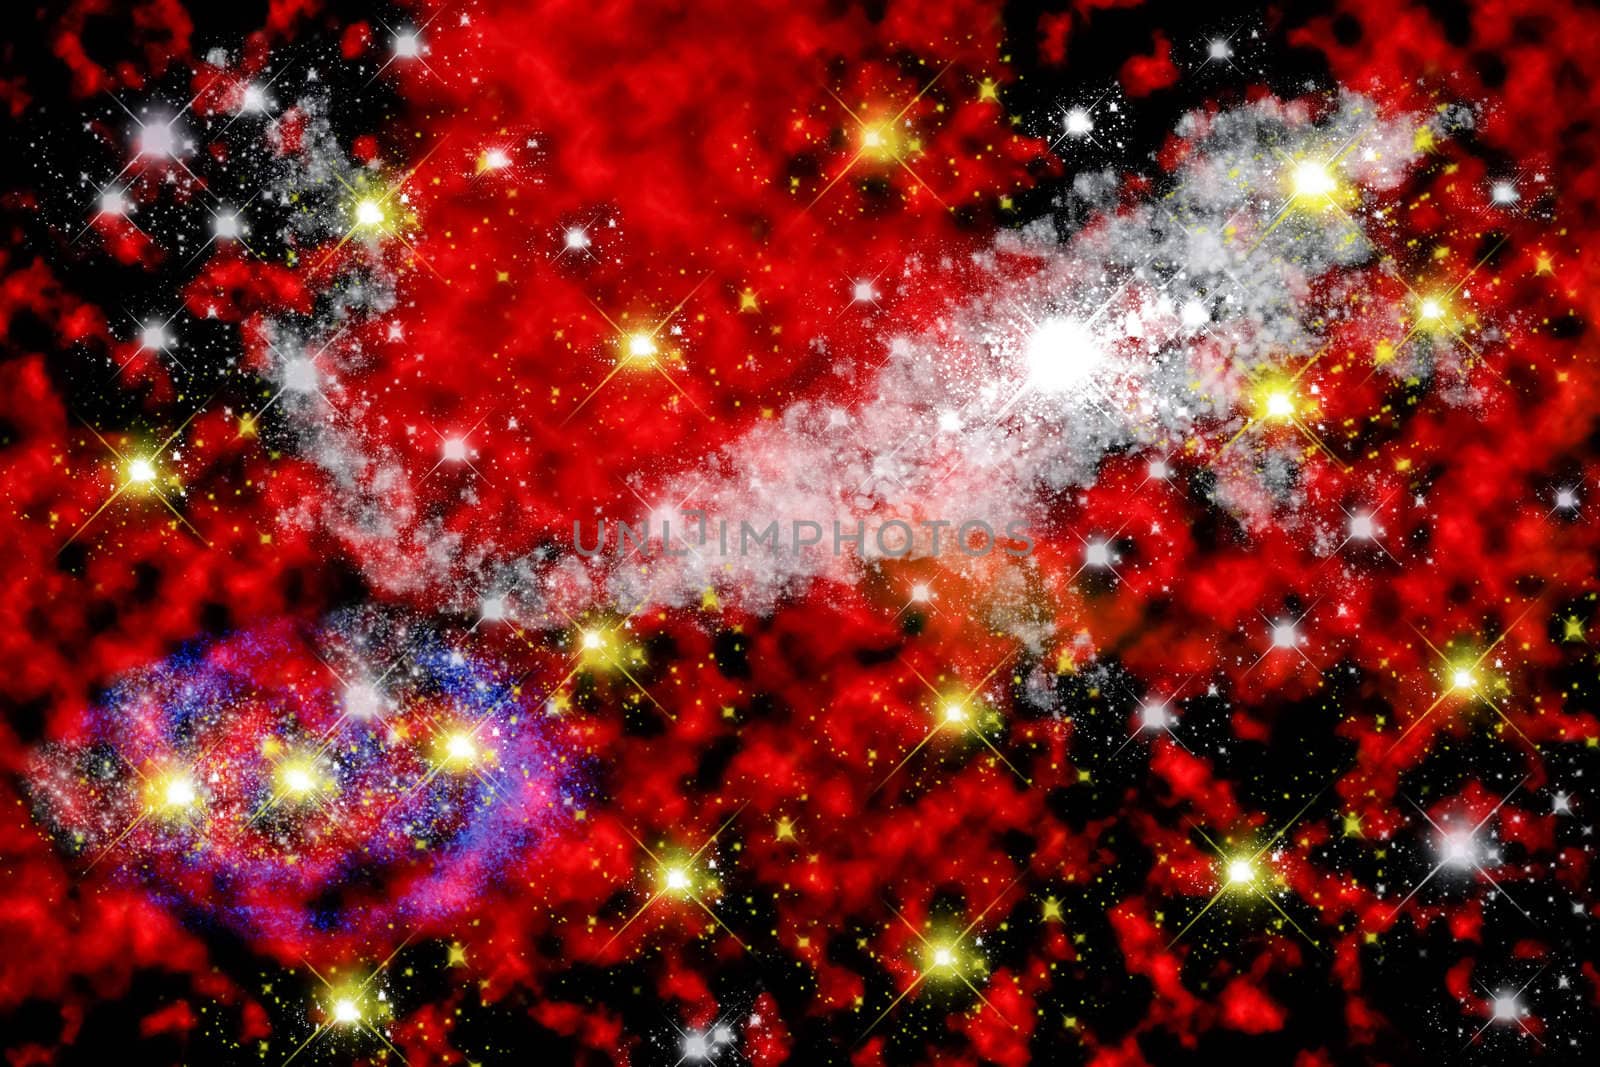 galaxy by koratmember